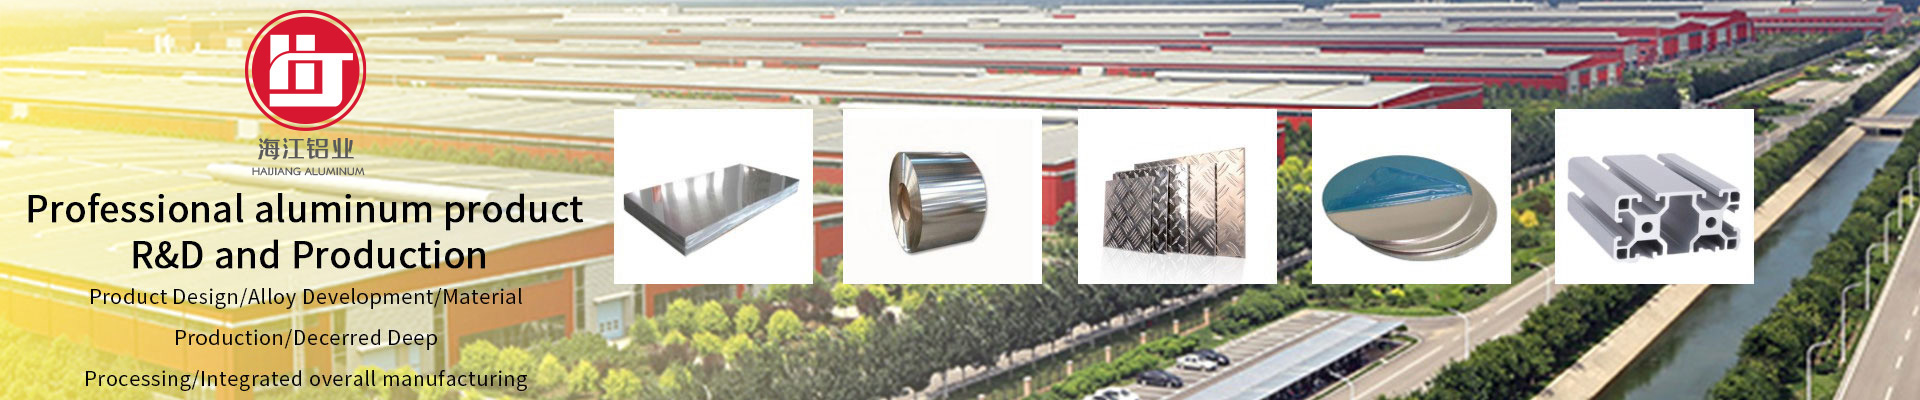 Shandong Haijiang Aluminum Industry Co. ，Ltd